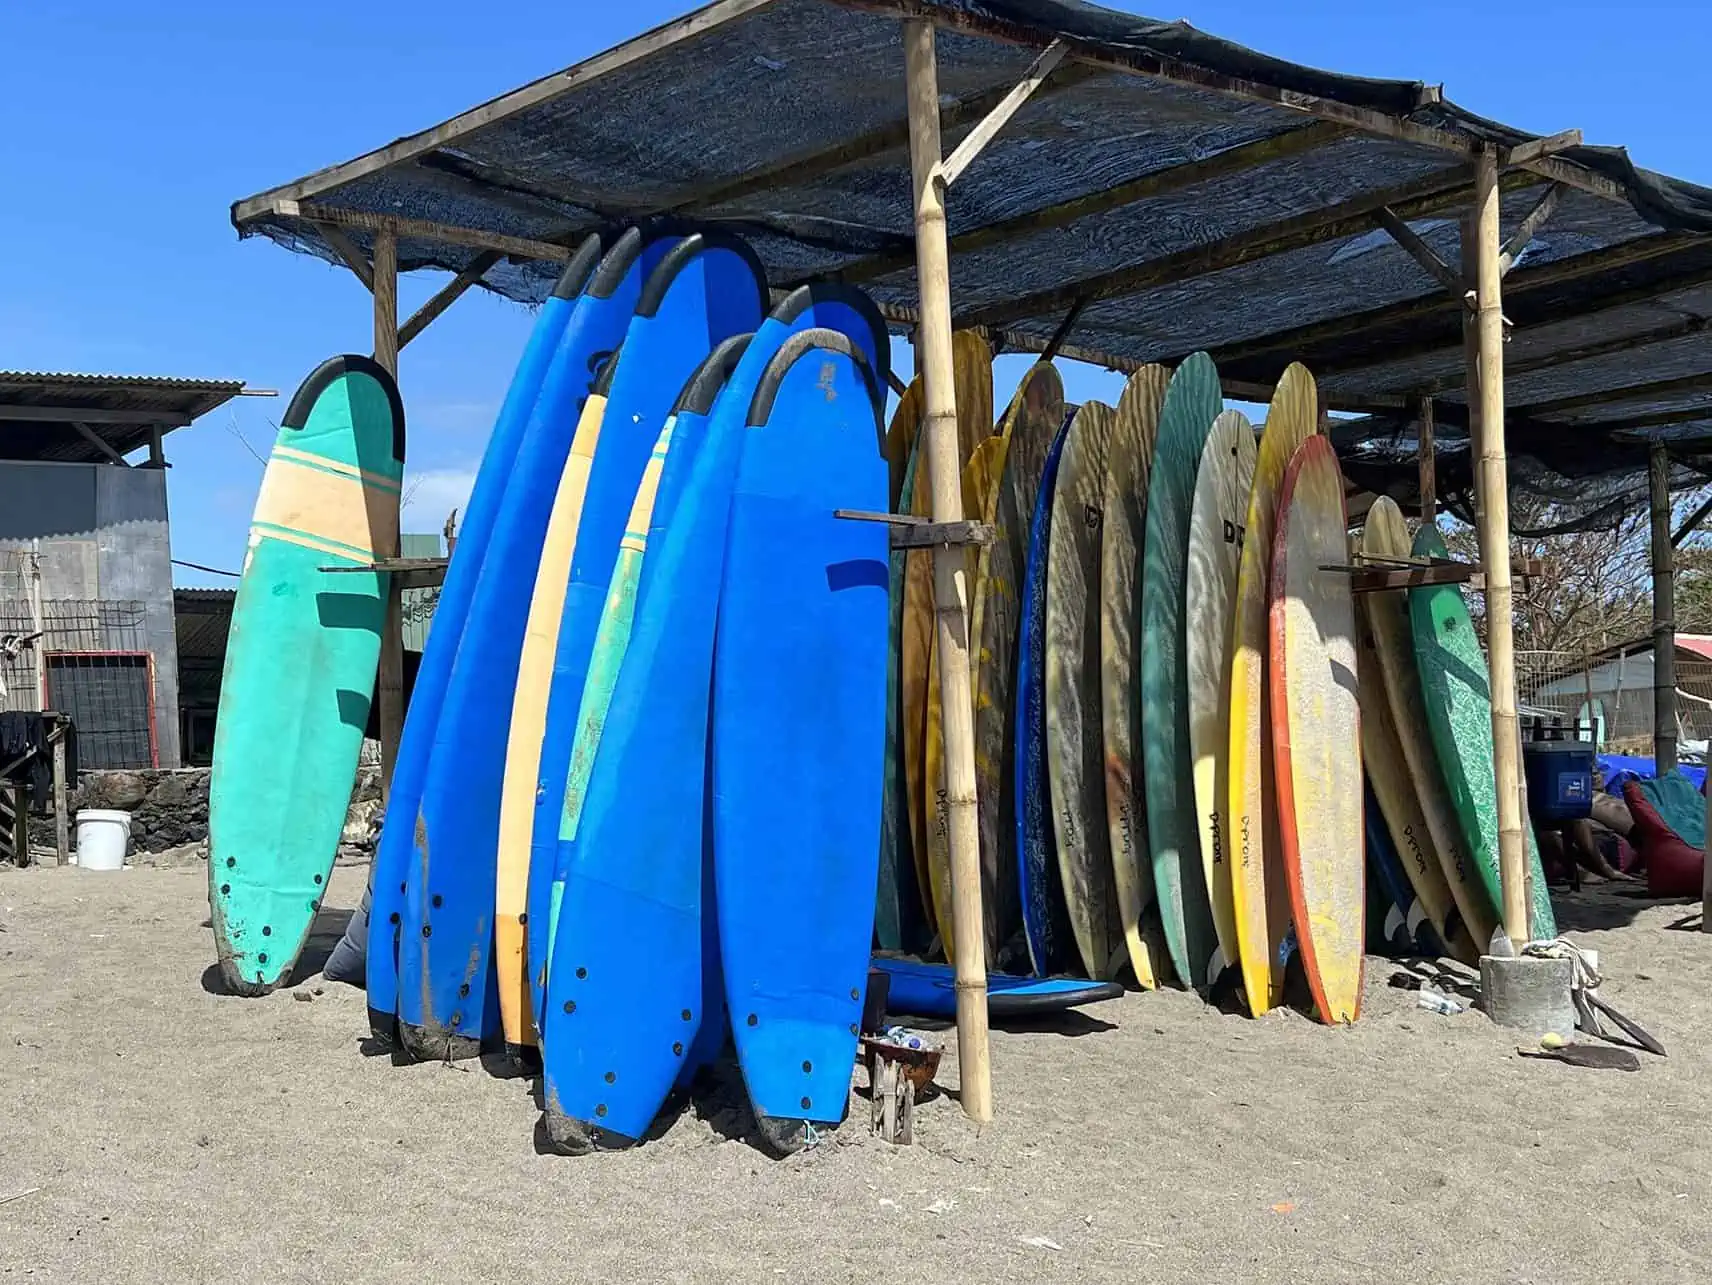 Rental surfboards in Bali, Indonesia